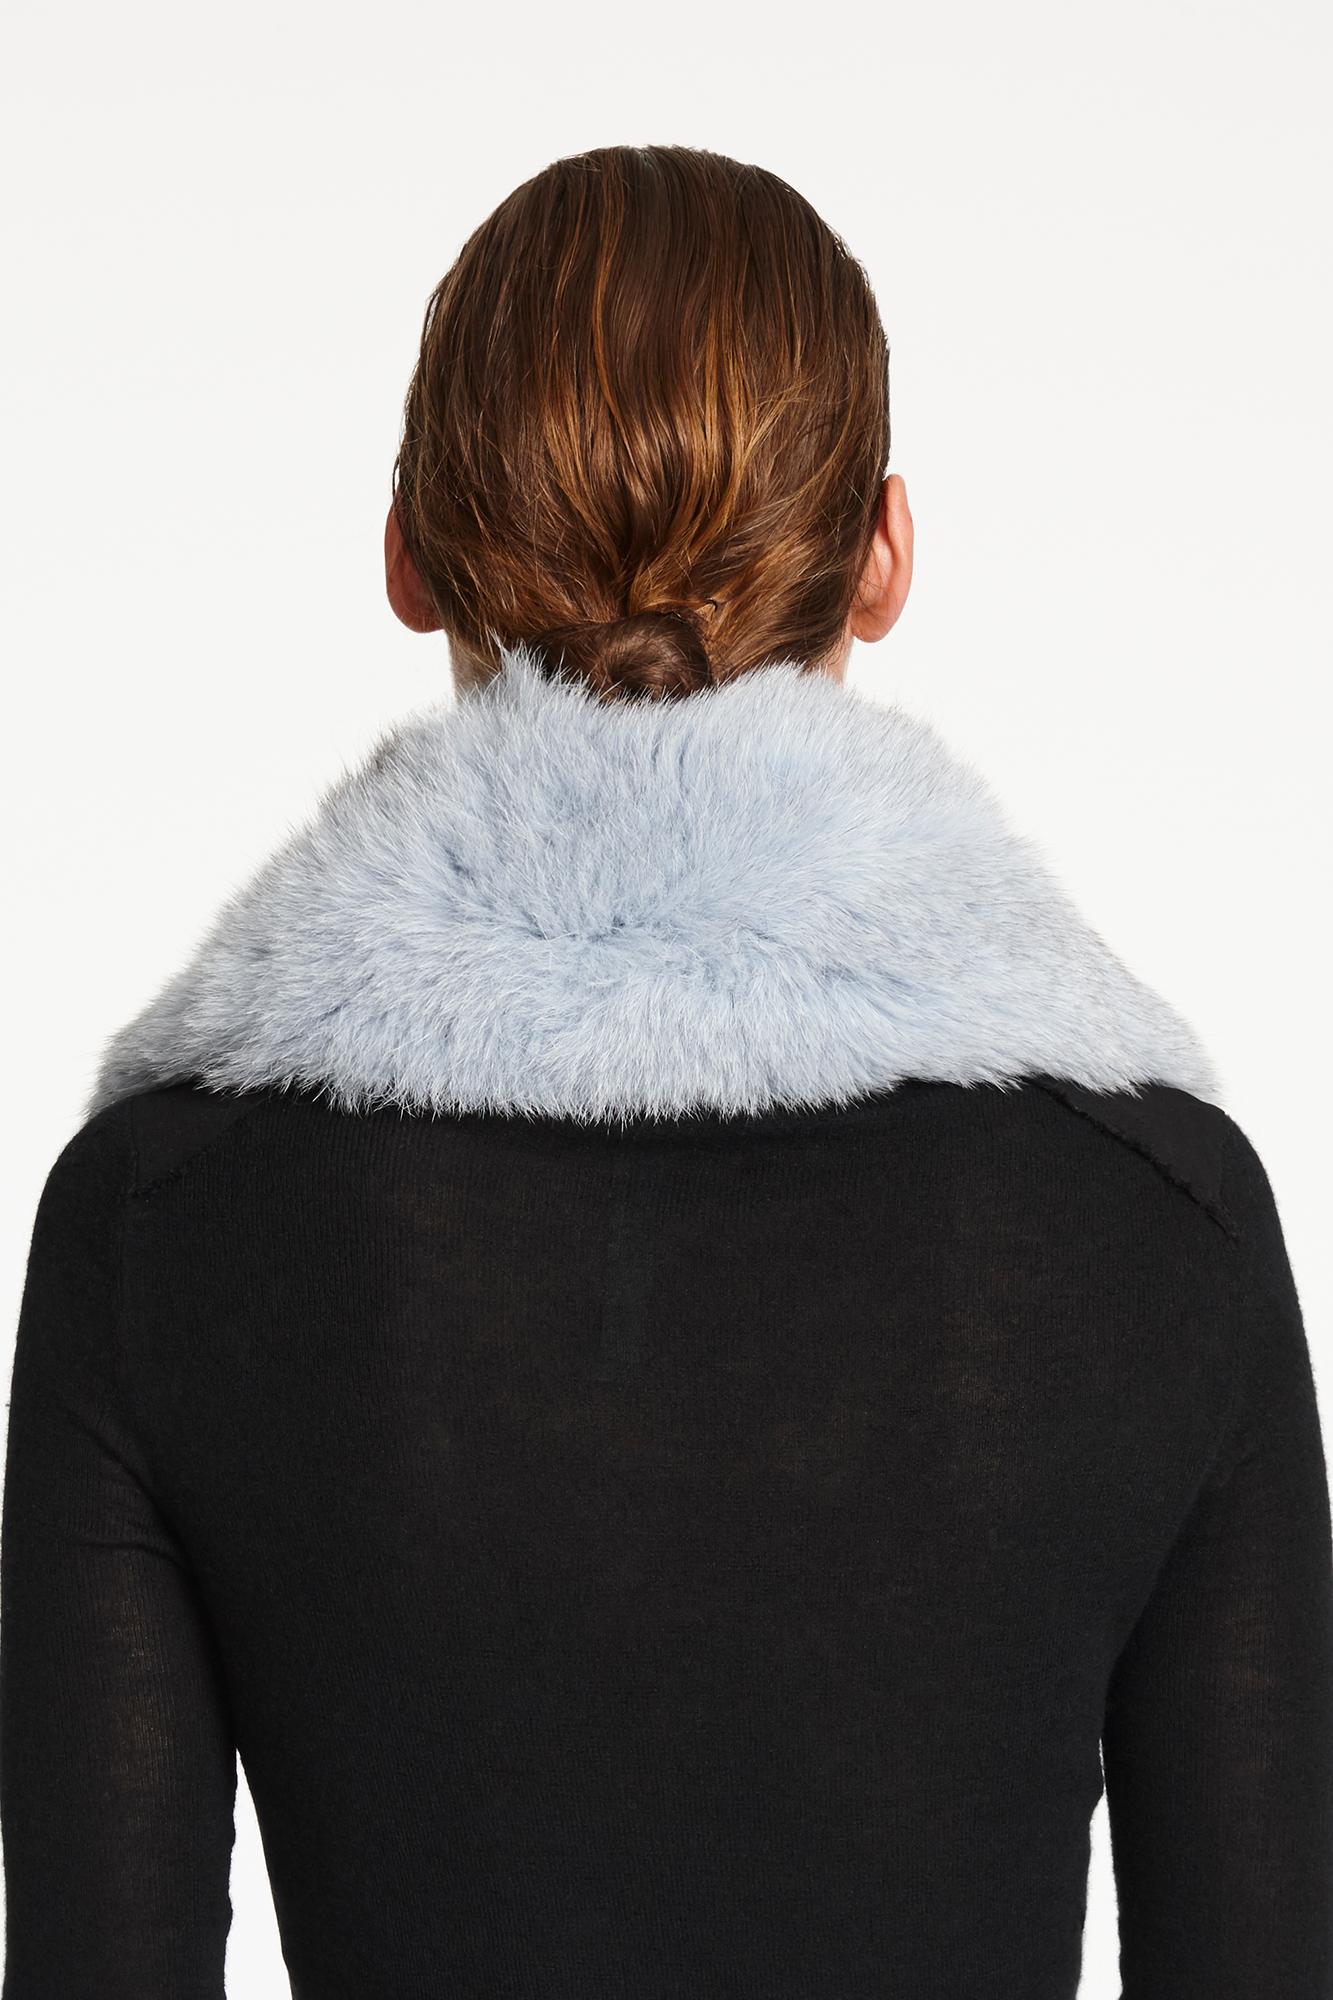 Verheyen London Peter Pan Collar in Iced Blue Fox Fur - Brand new  2